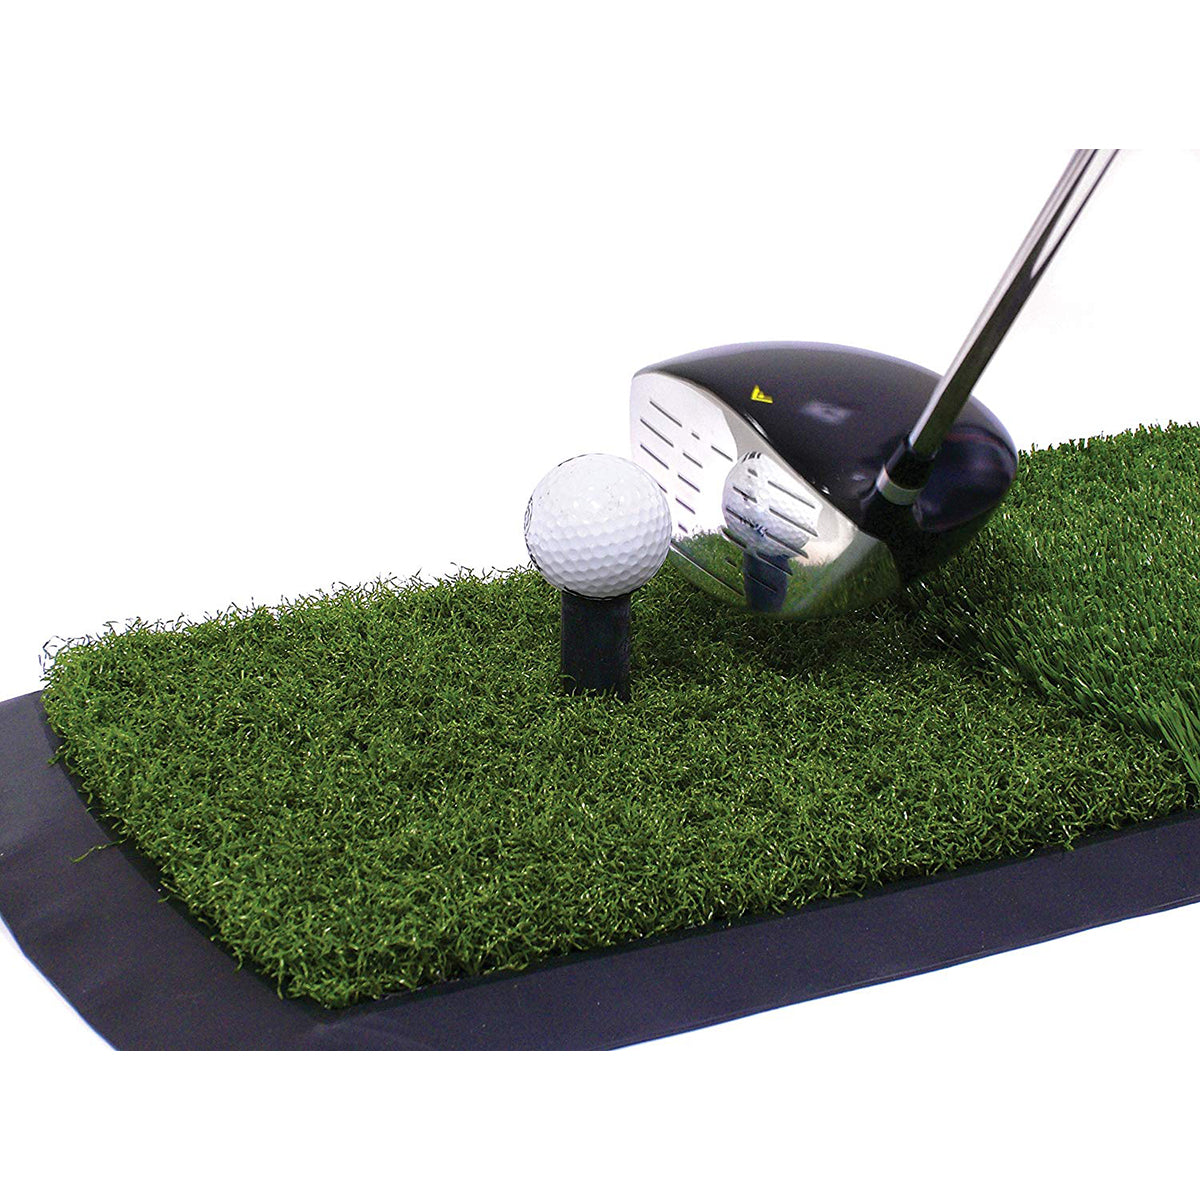 SKLZ Launch Pad Multi-Purpose Practice Golf Mat - Green SKLZ